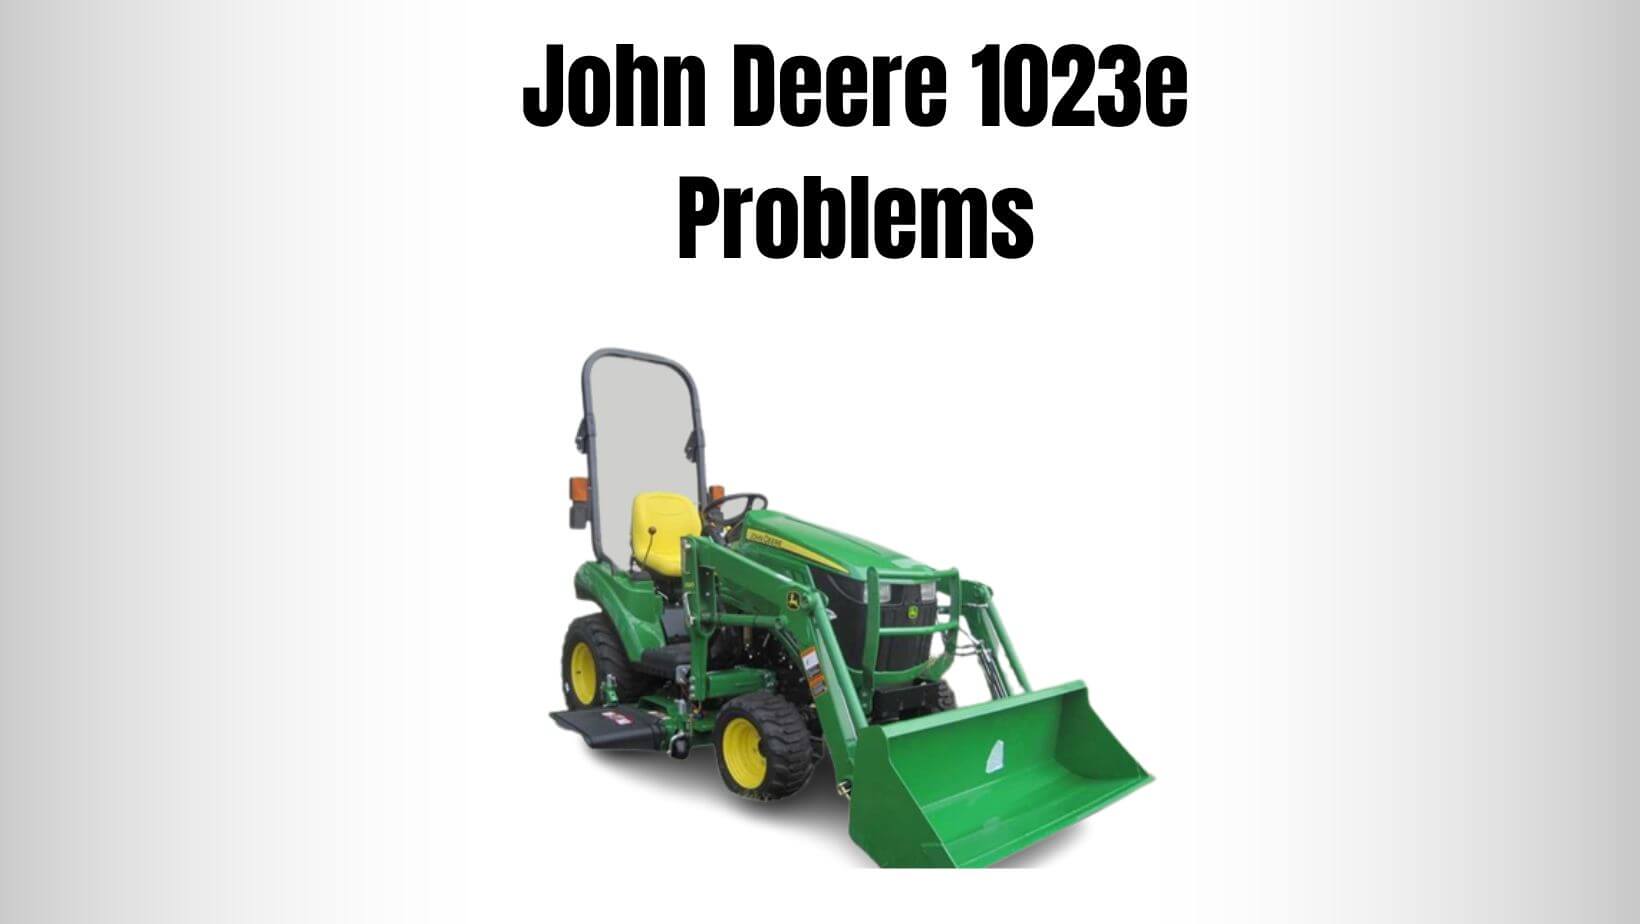 John Deere 1023e Problems